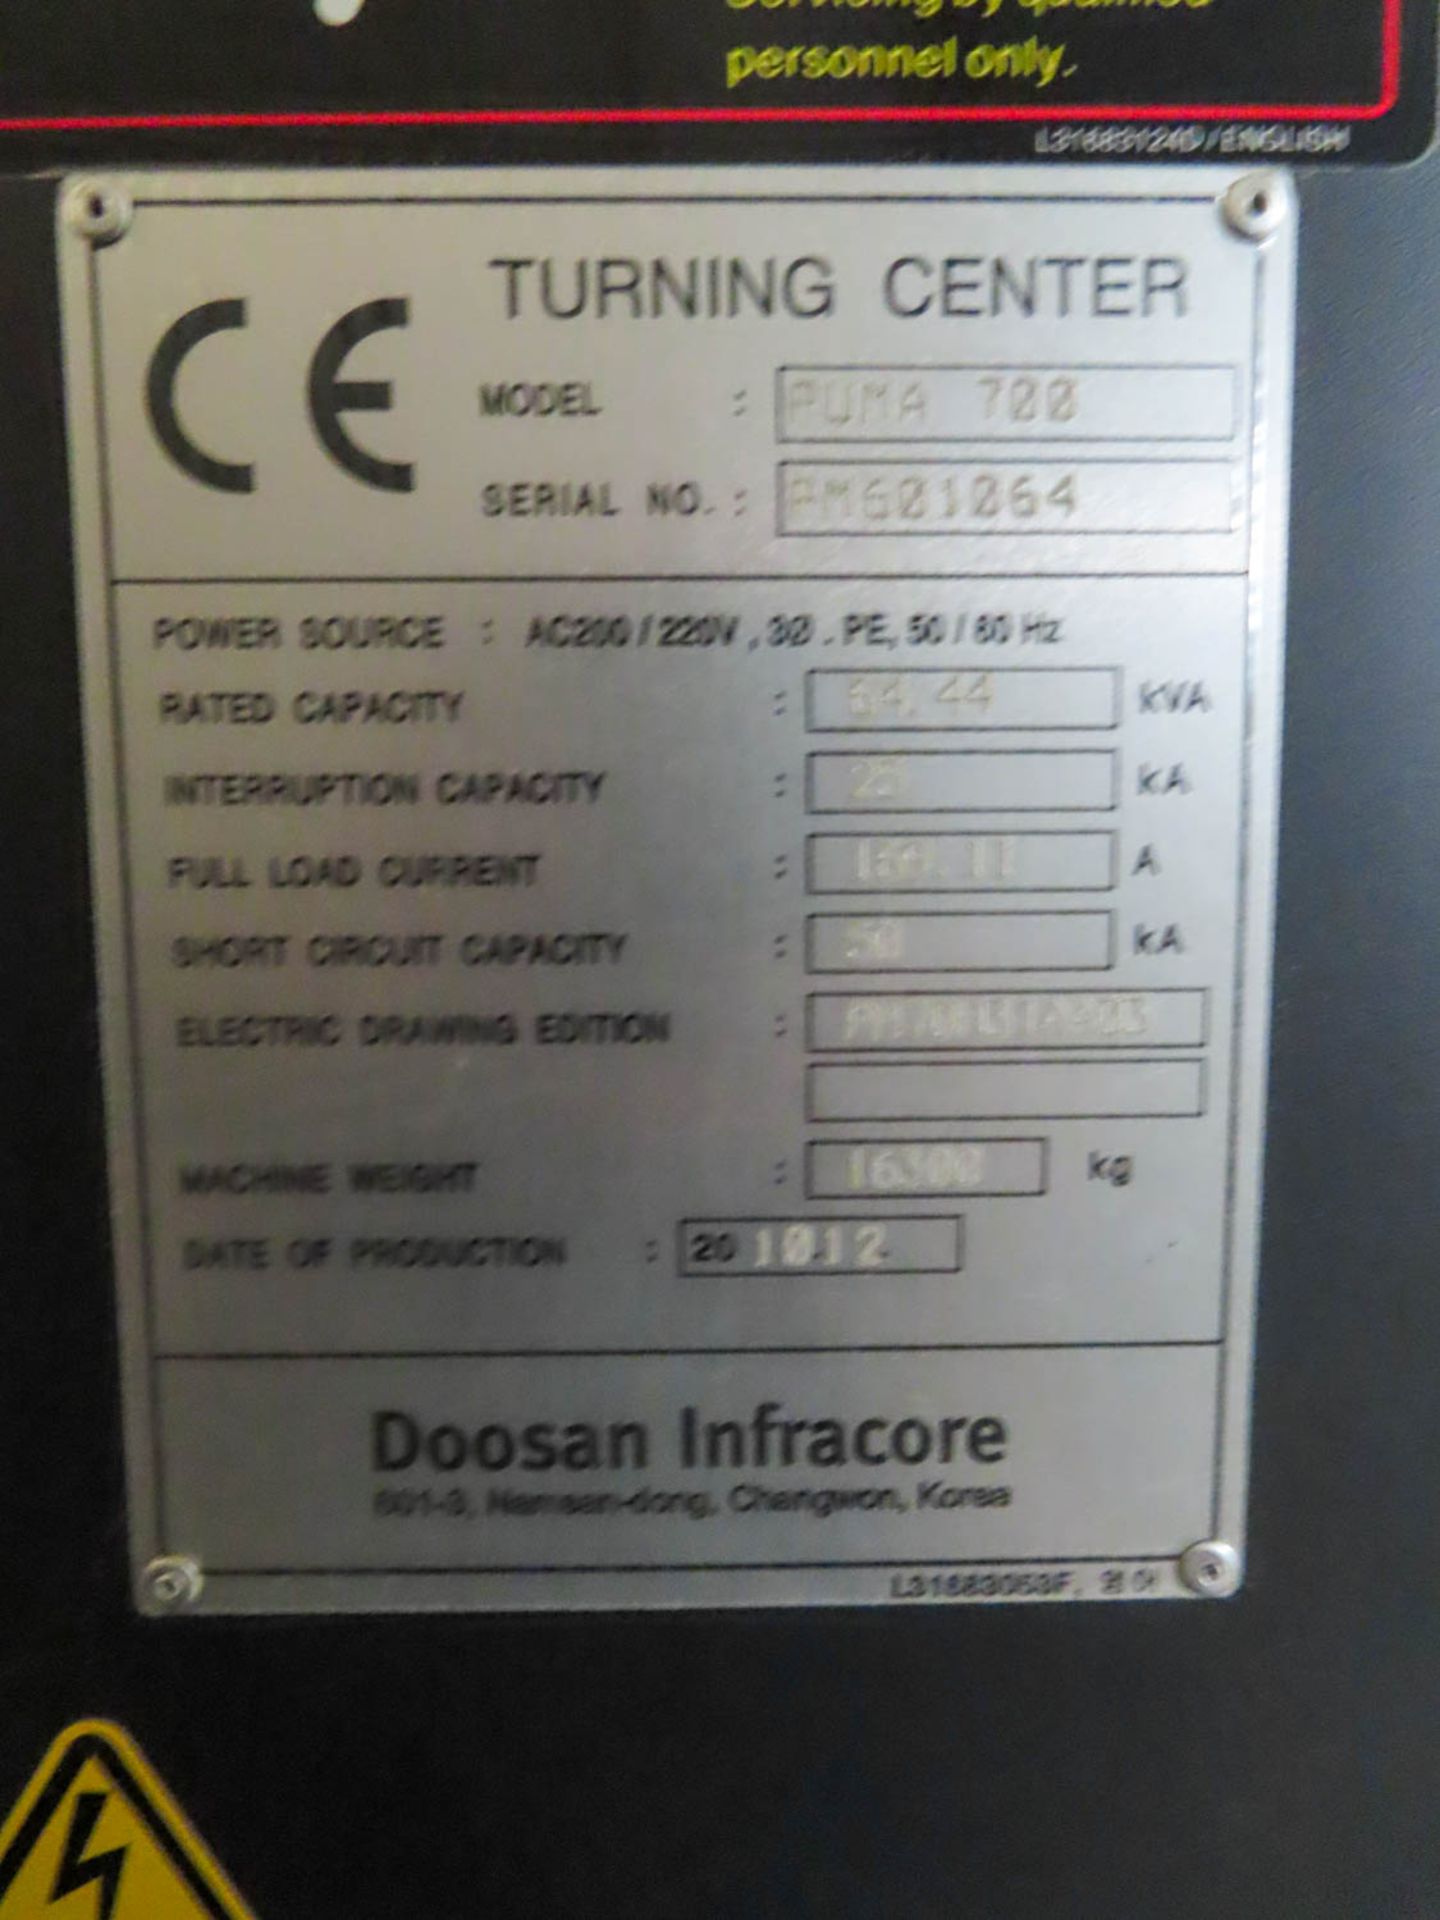 Doosan Puma 700 CNC Turning Center, Fanuc 32iA CNC Controls, 40.5" Swing Over Bed (2010) - Image 12 of 12